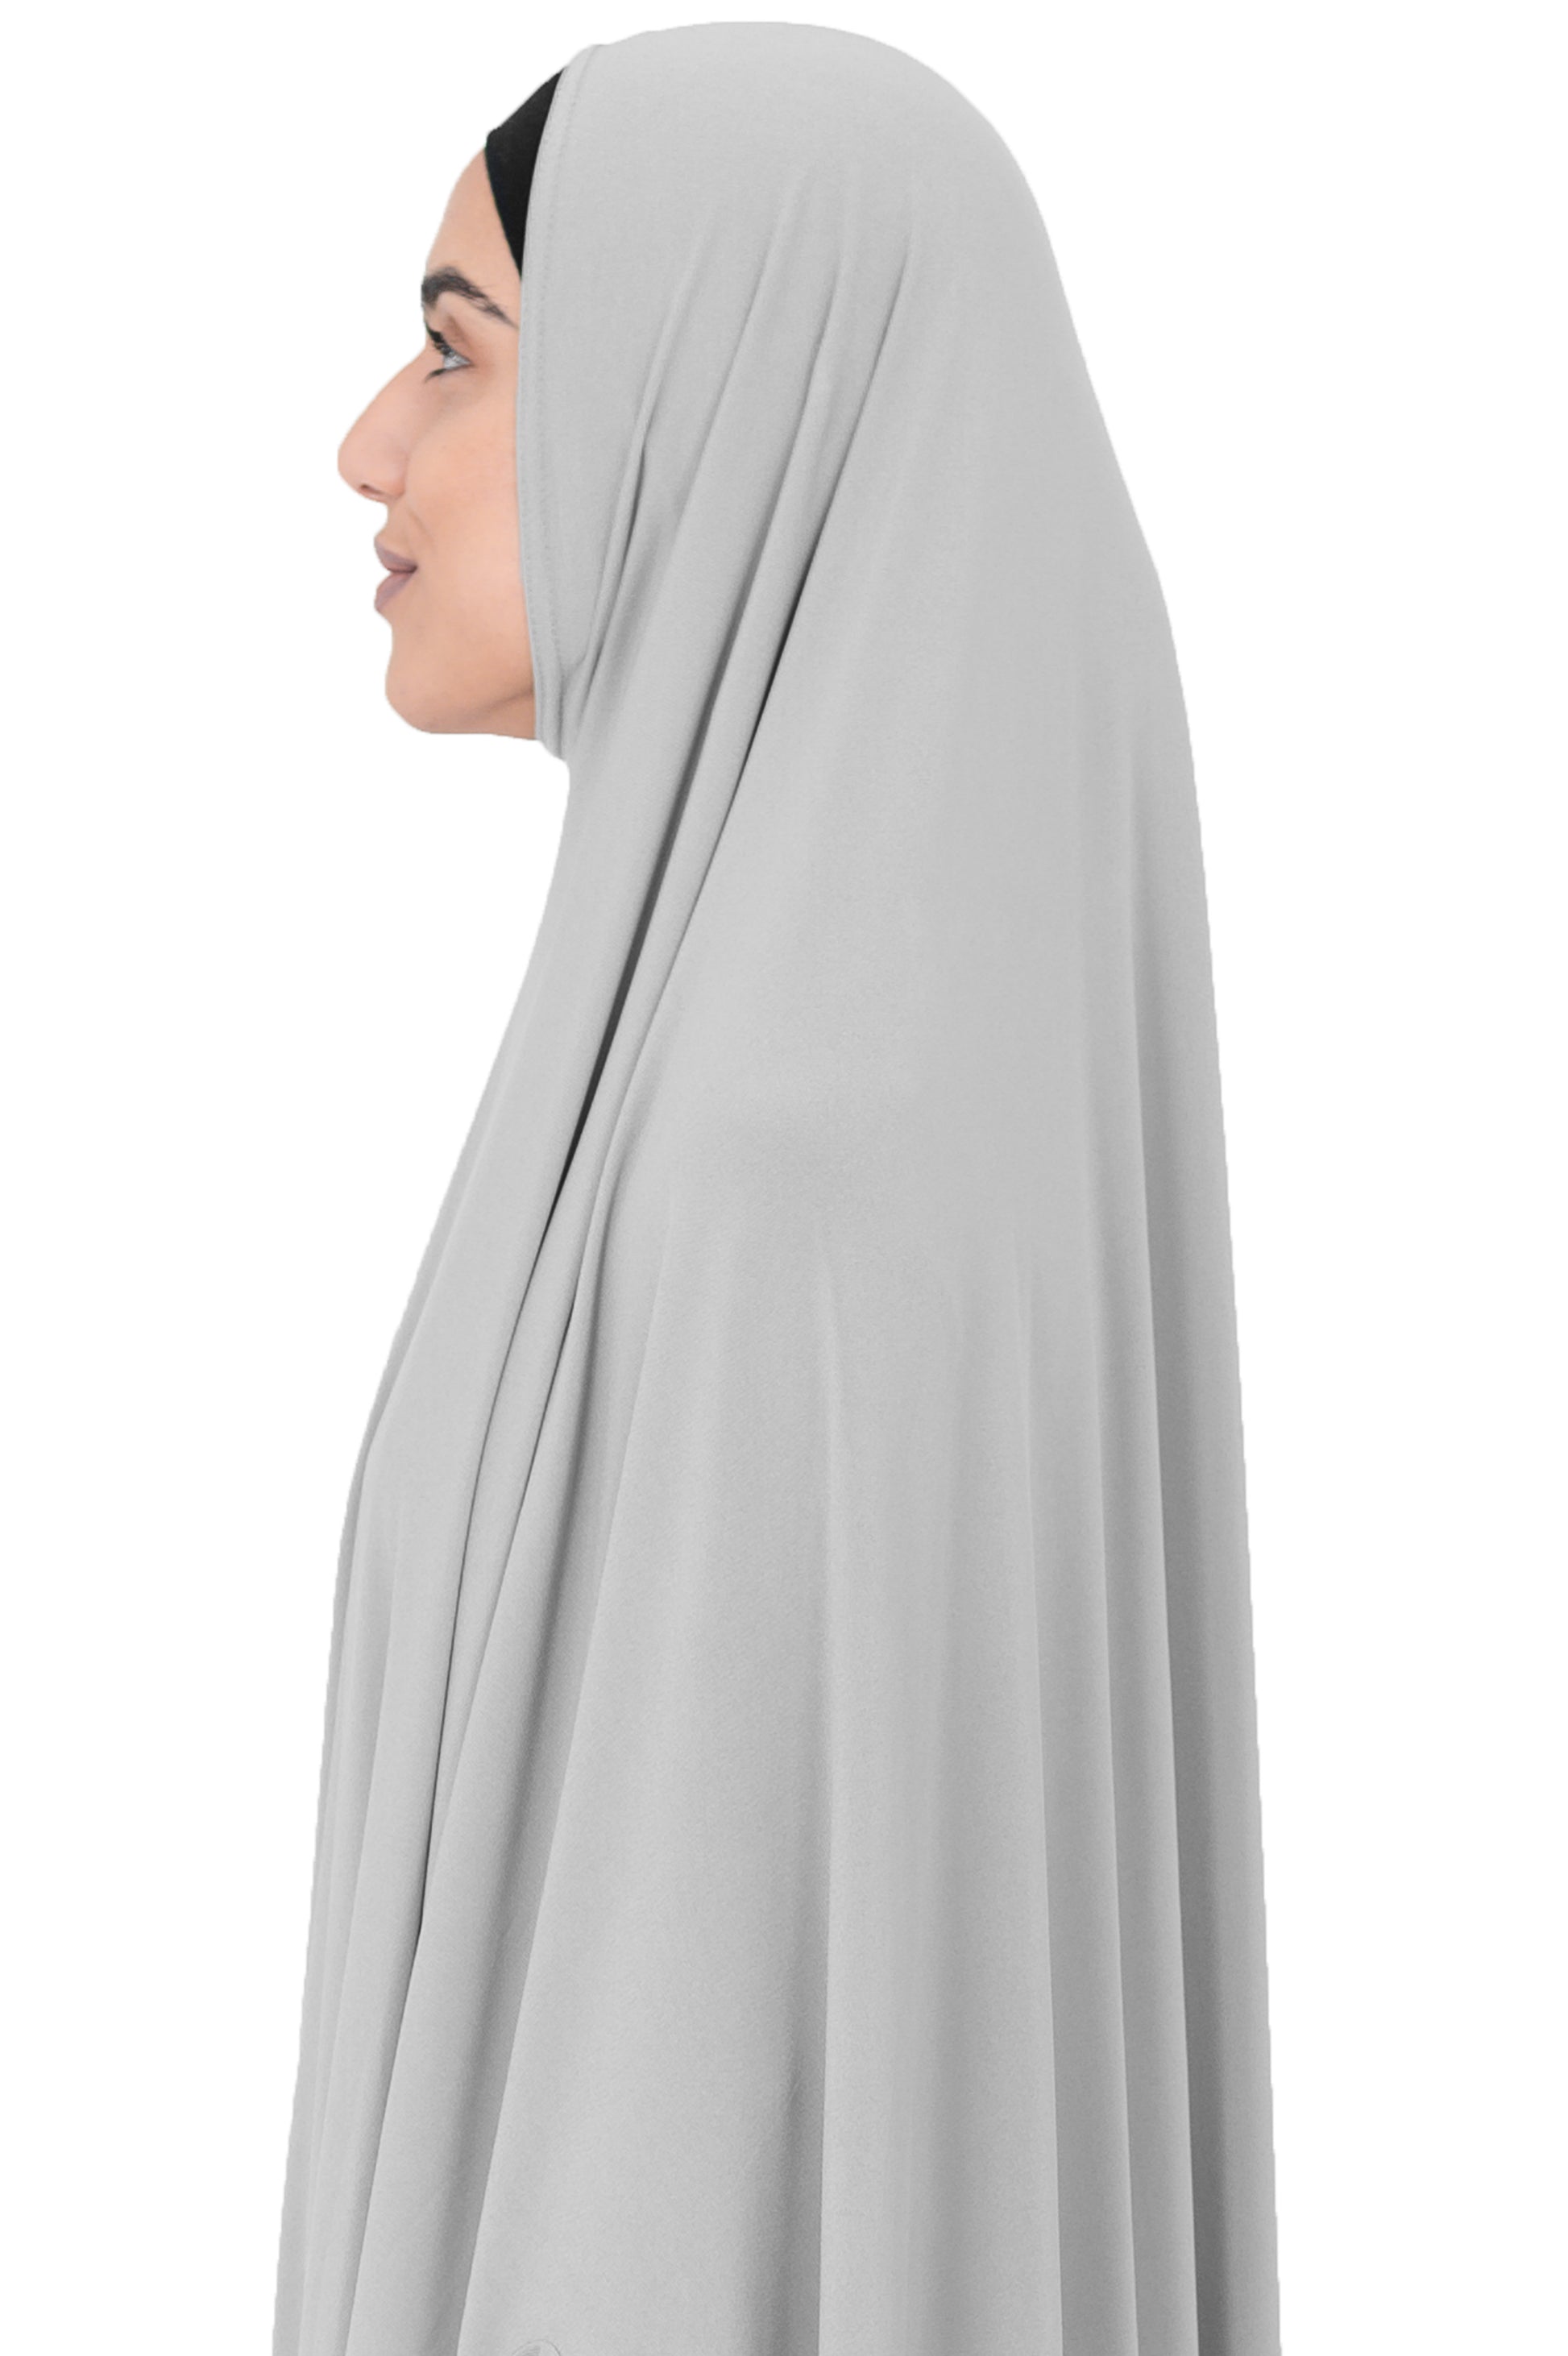 Xlong Standard Long Jelbab in Silver Grey - Behind The Veil